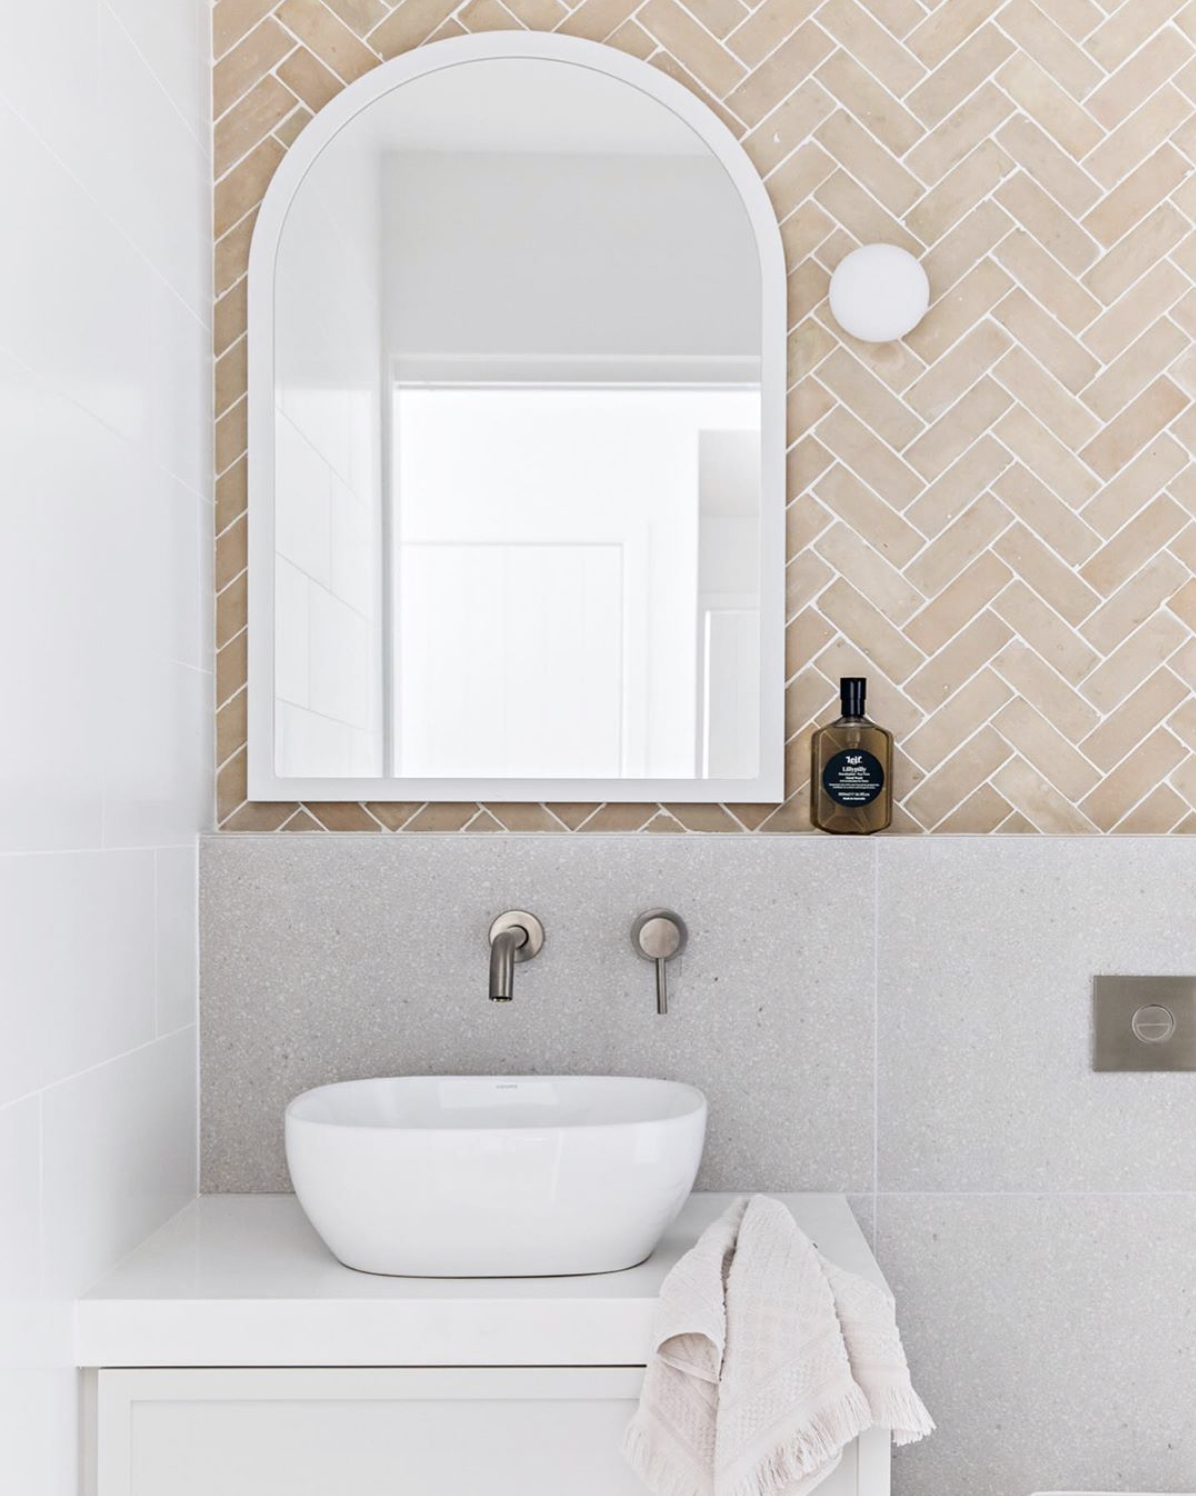 Terracotta bathroom Bathrooms that don't use white tiles